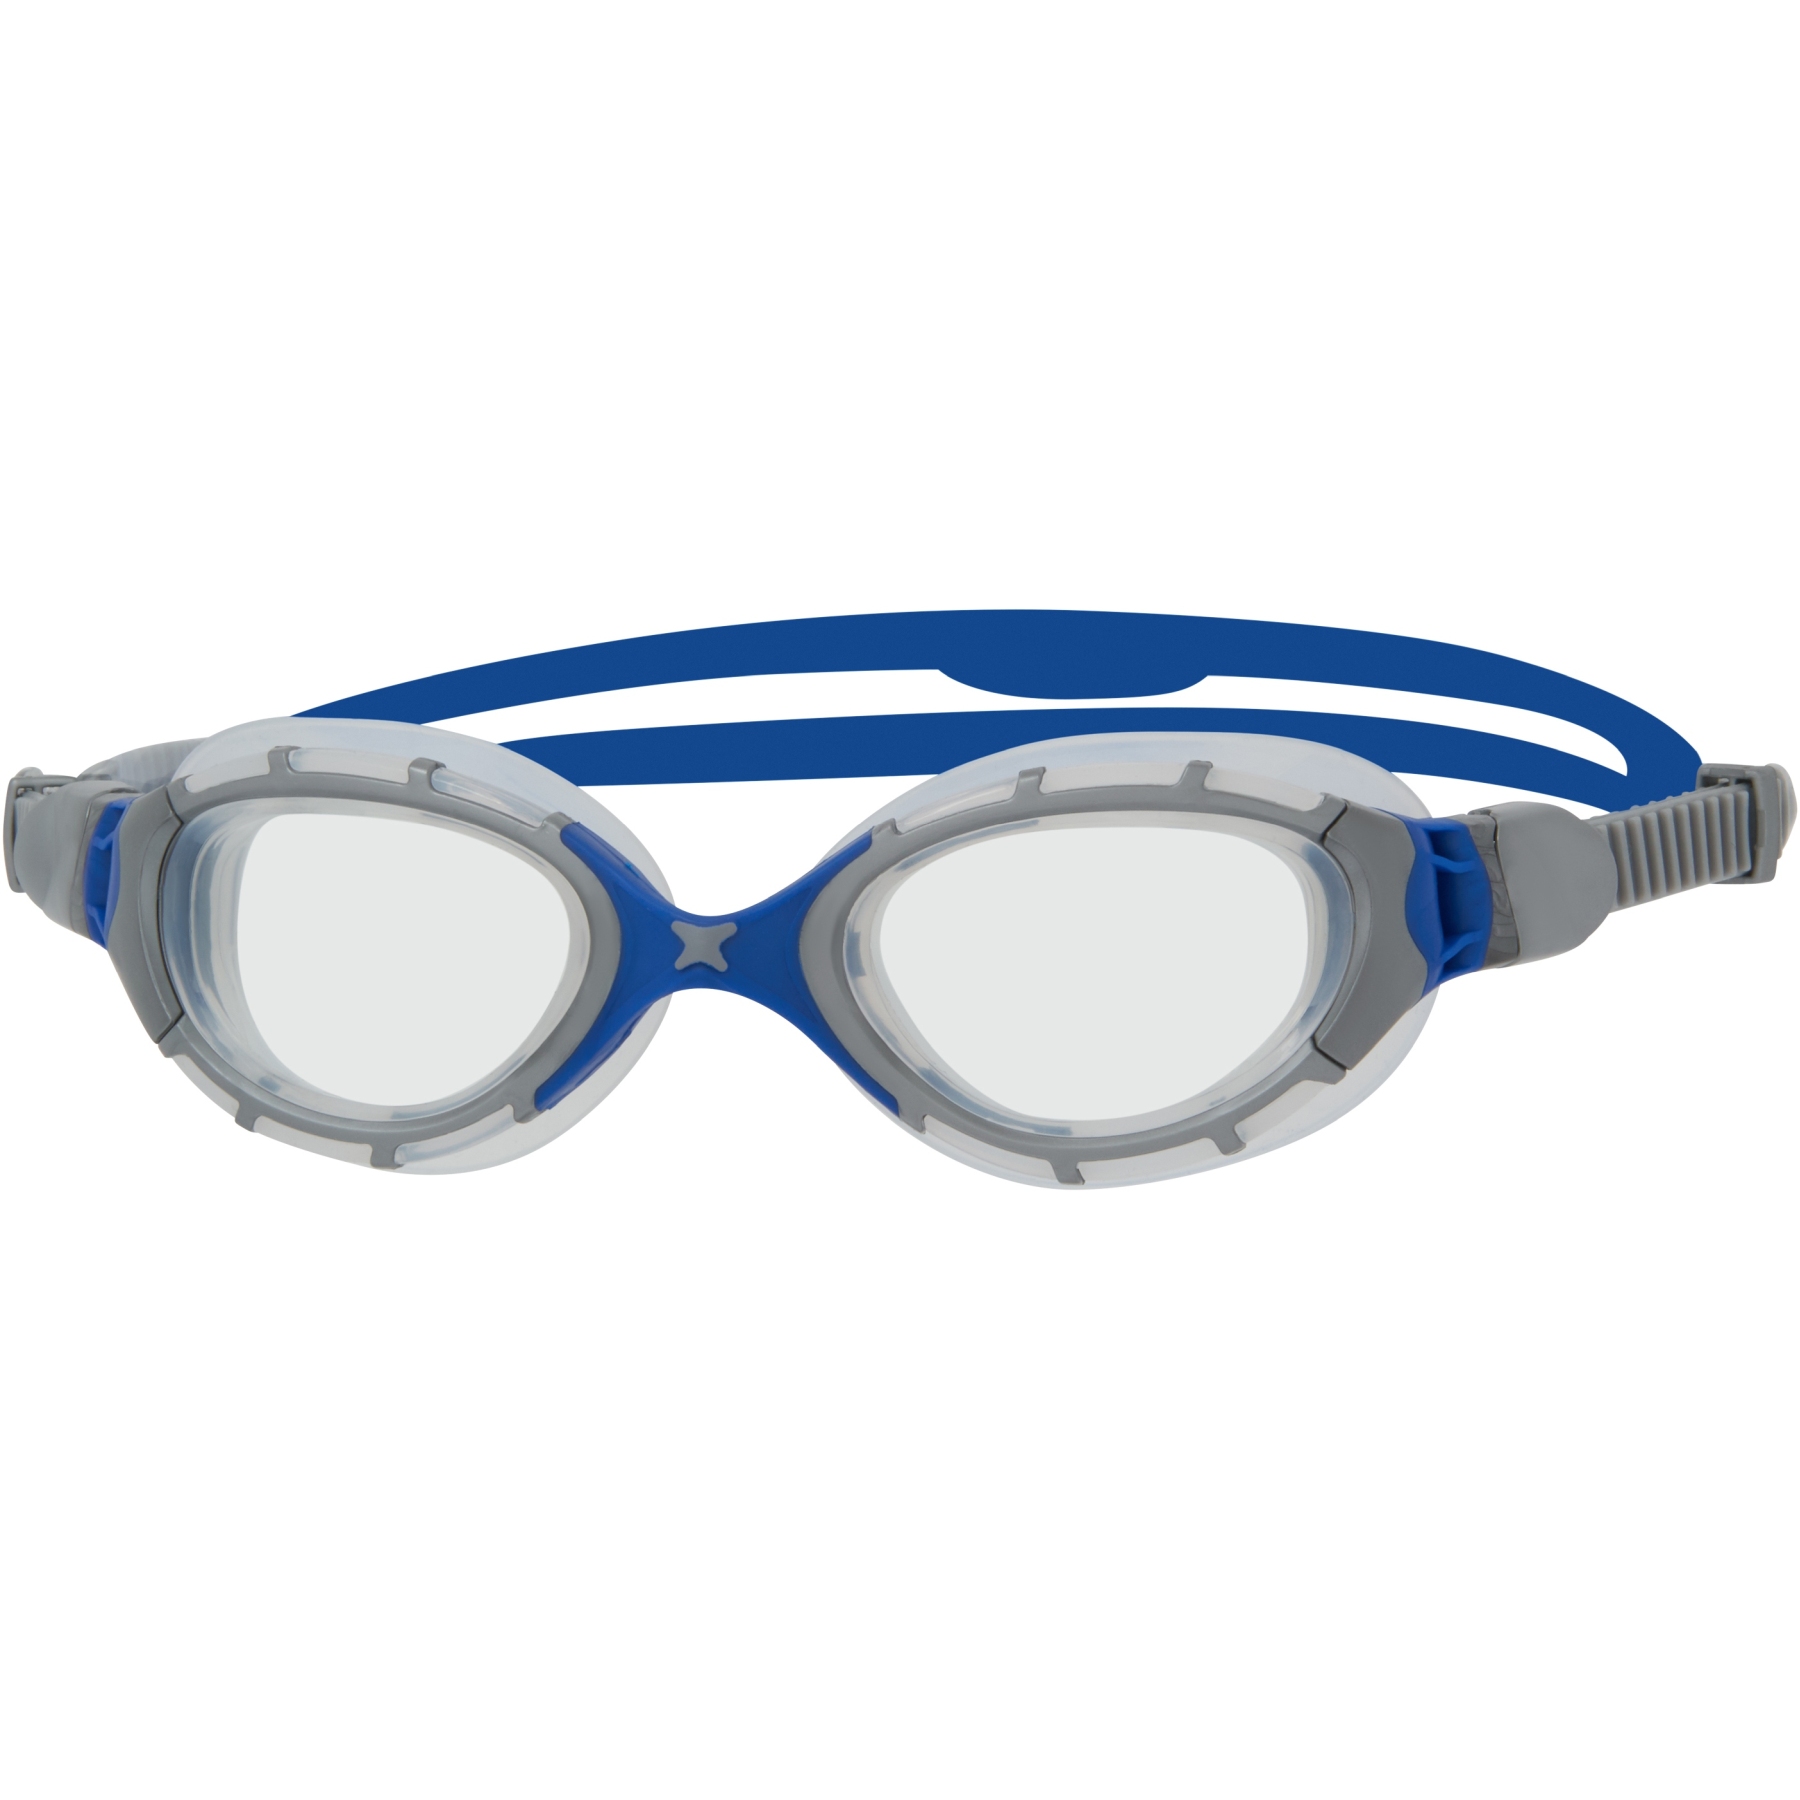 Productfoto van Zoggs Predator Flex Swimming Goggles - grey/blue/clear